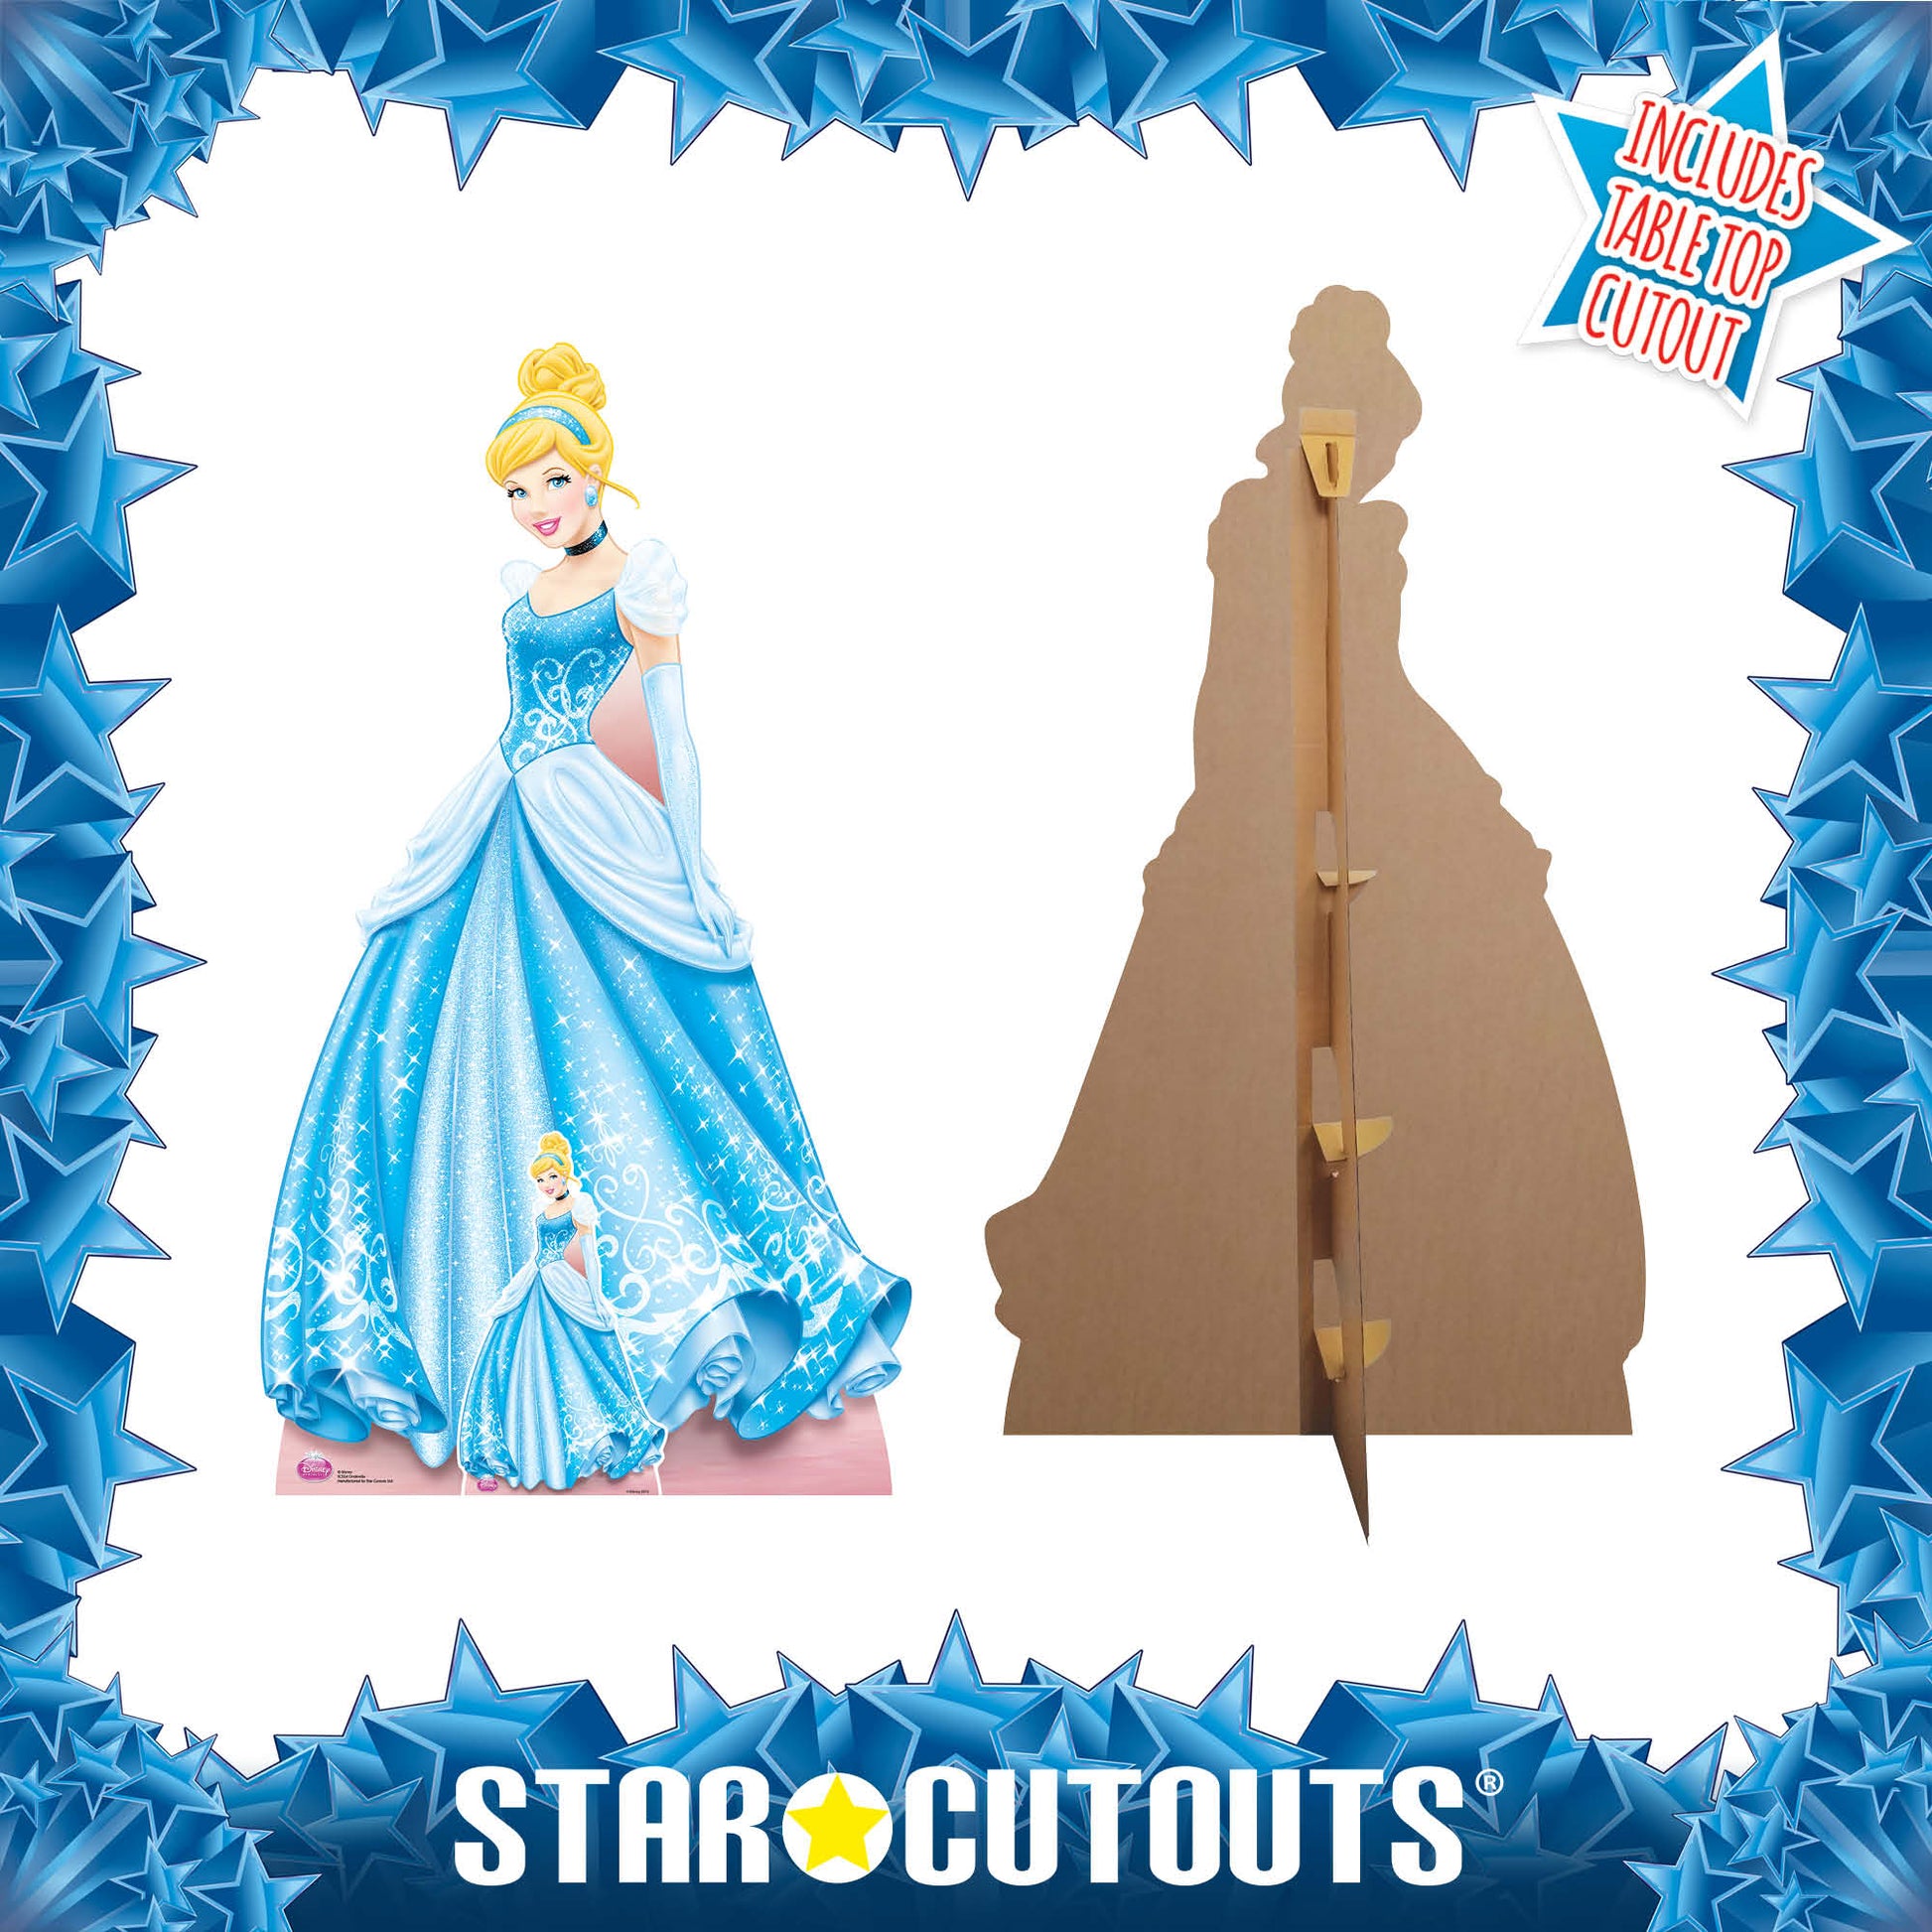 Official Cinderella Cardboard Cutout